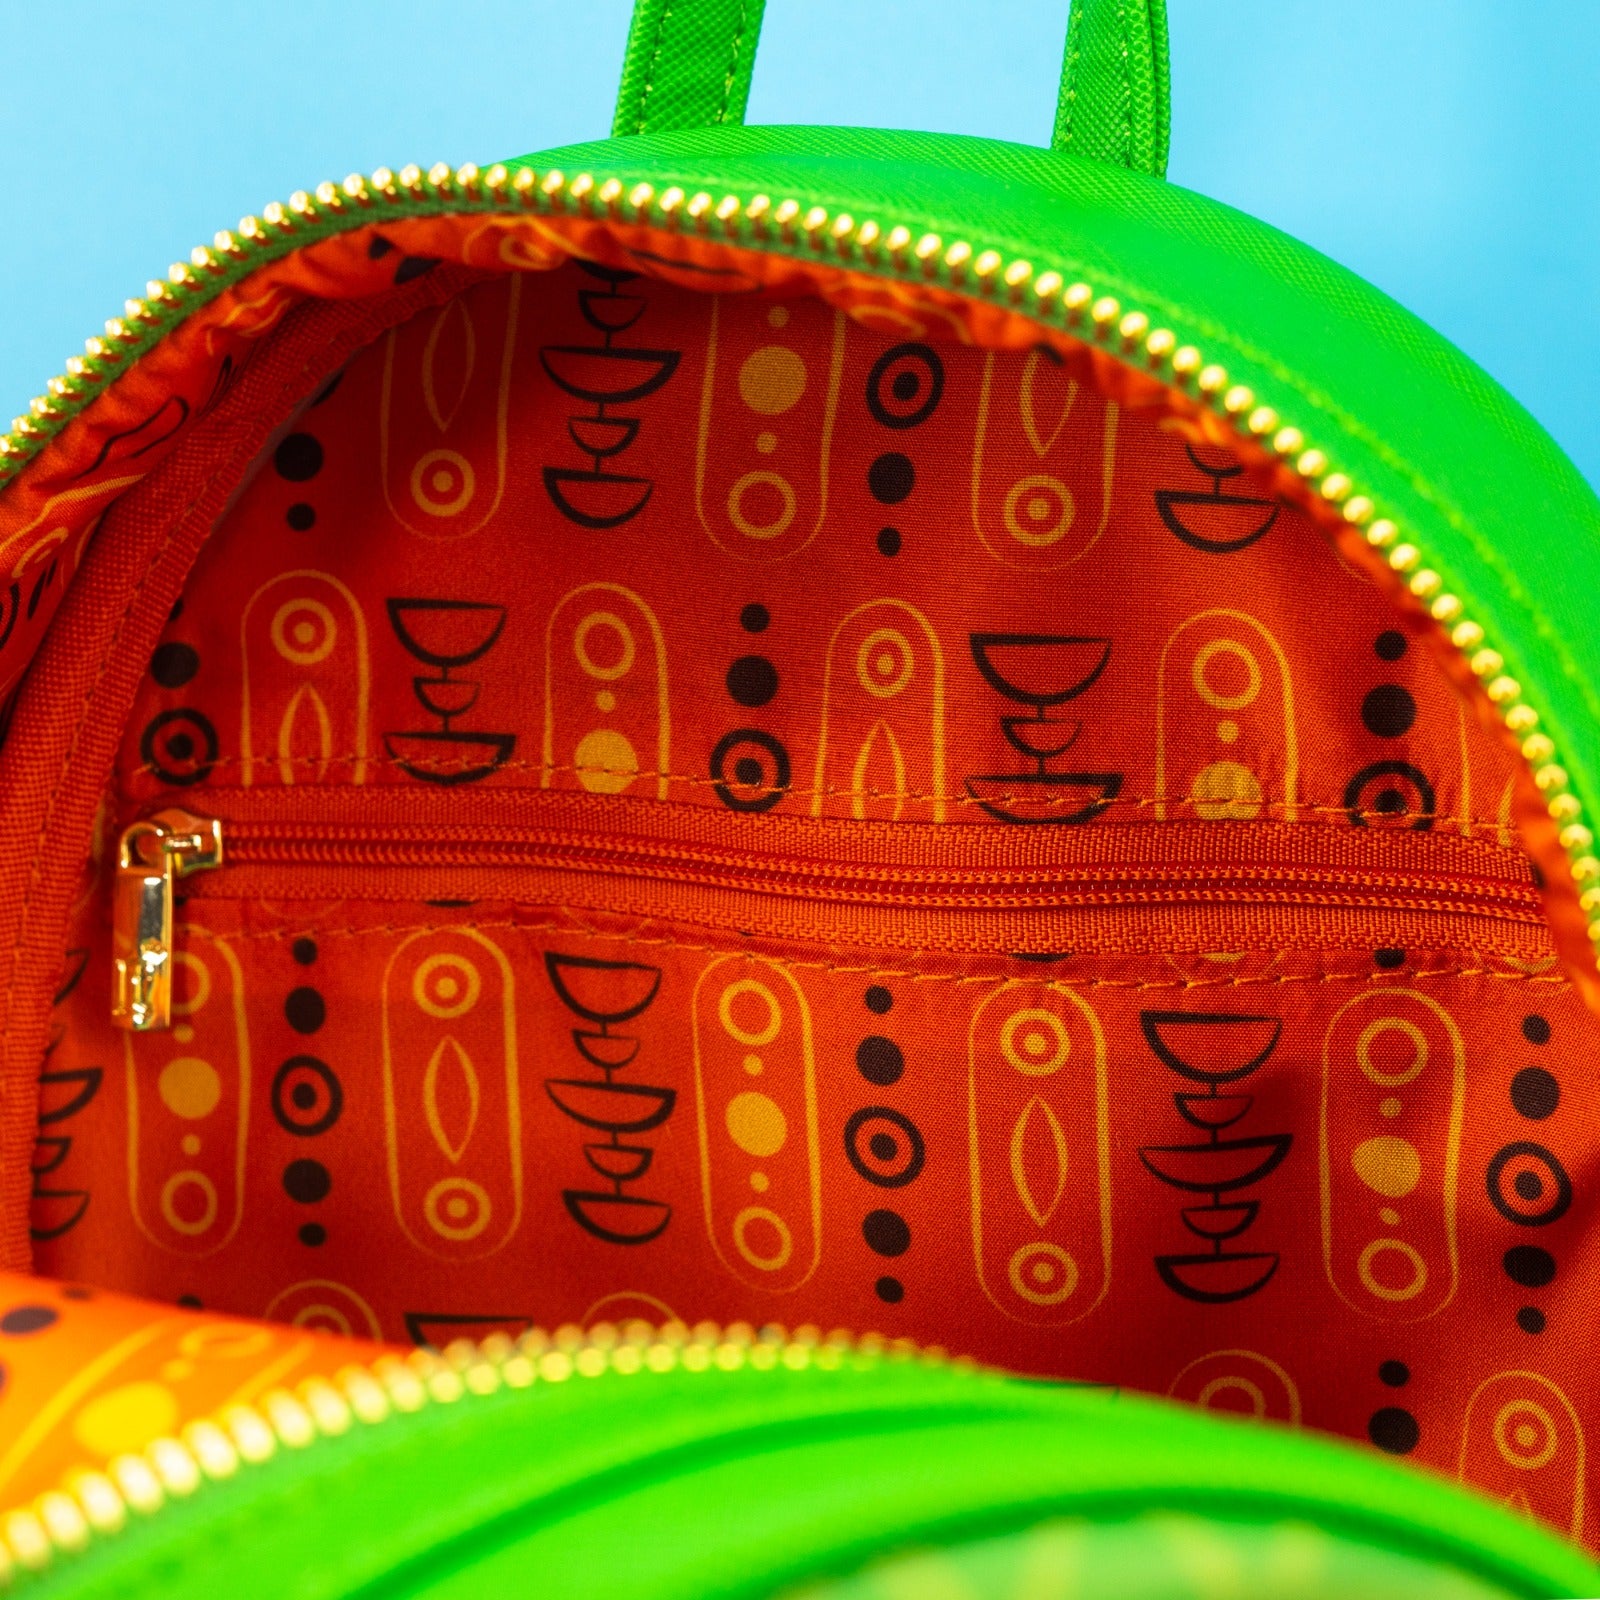 Loungefly x DreamWorks Madagascar King Julien Cosplay Mini Backpack